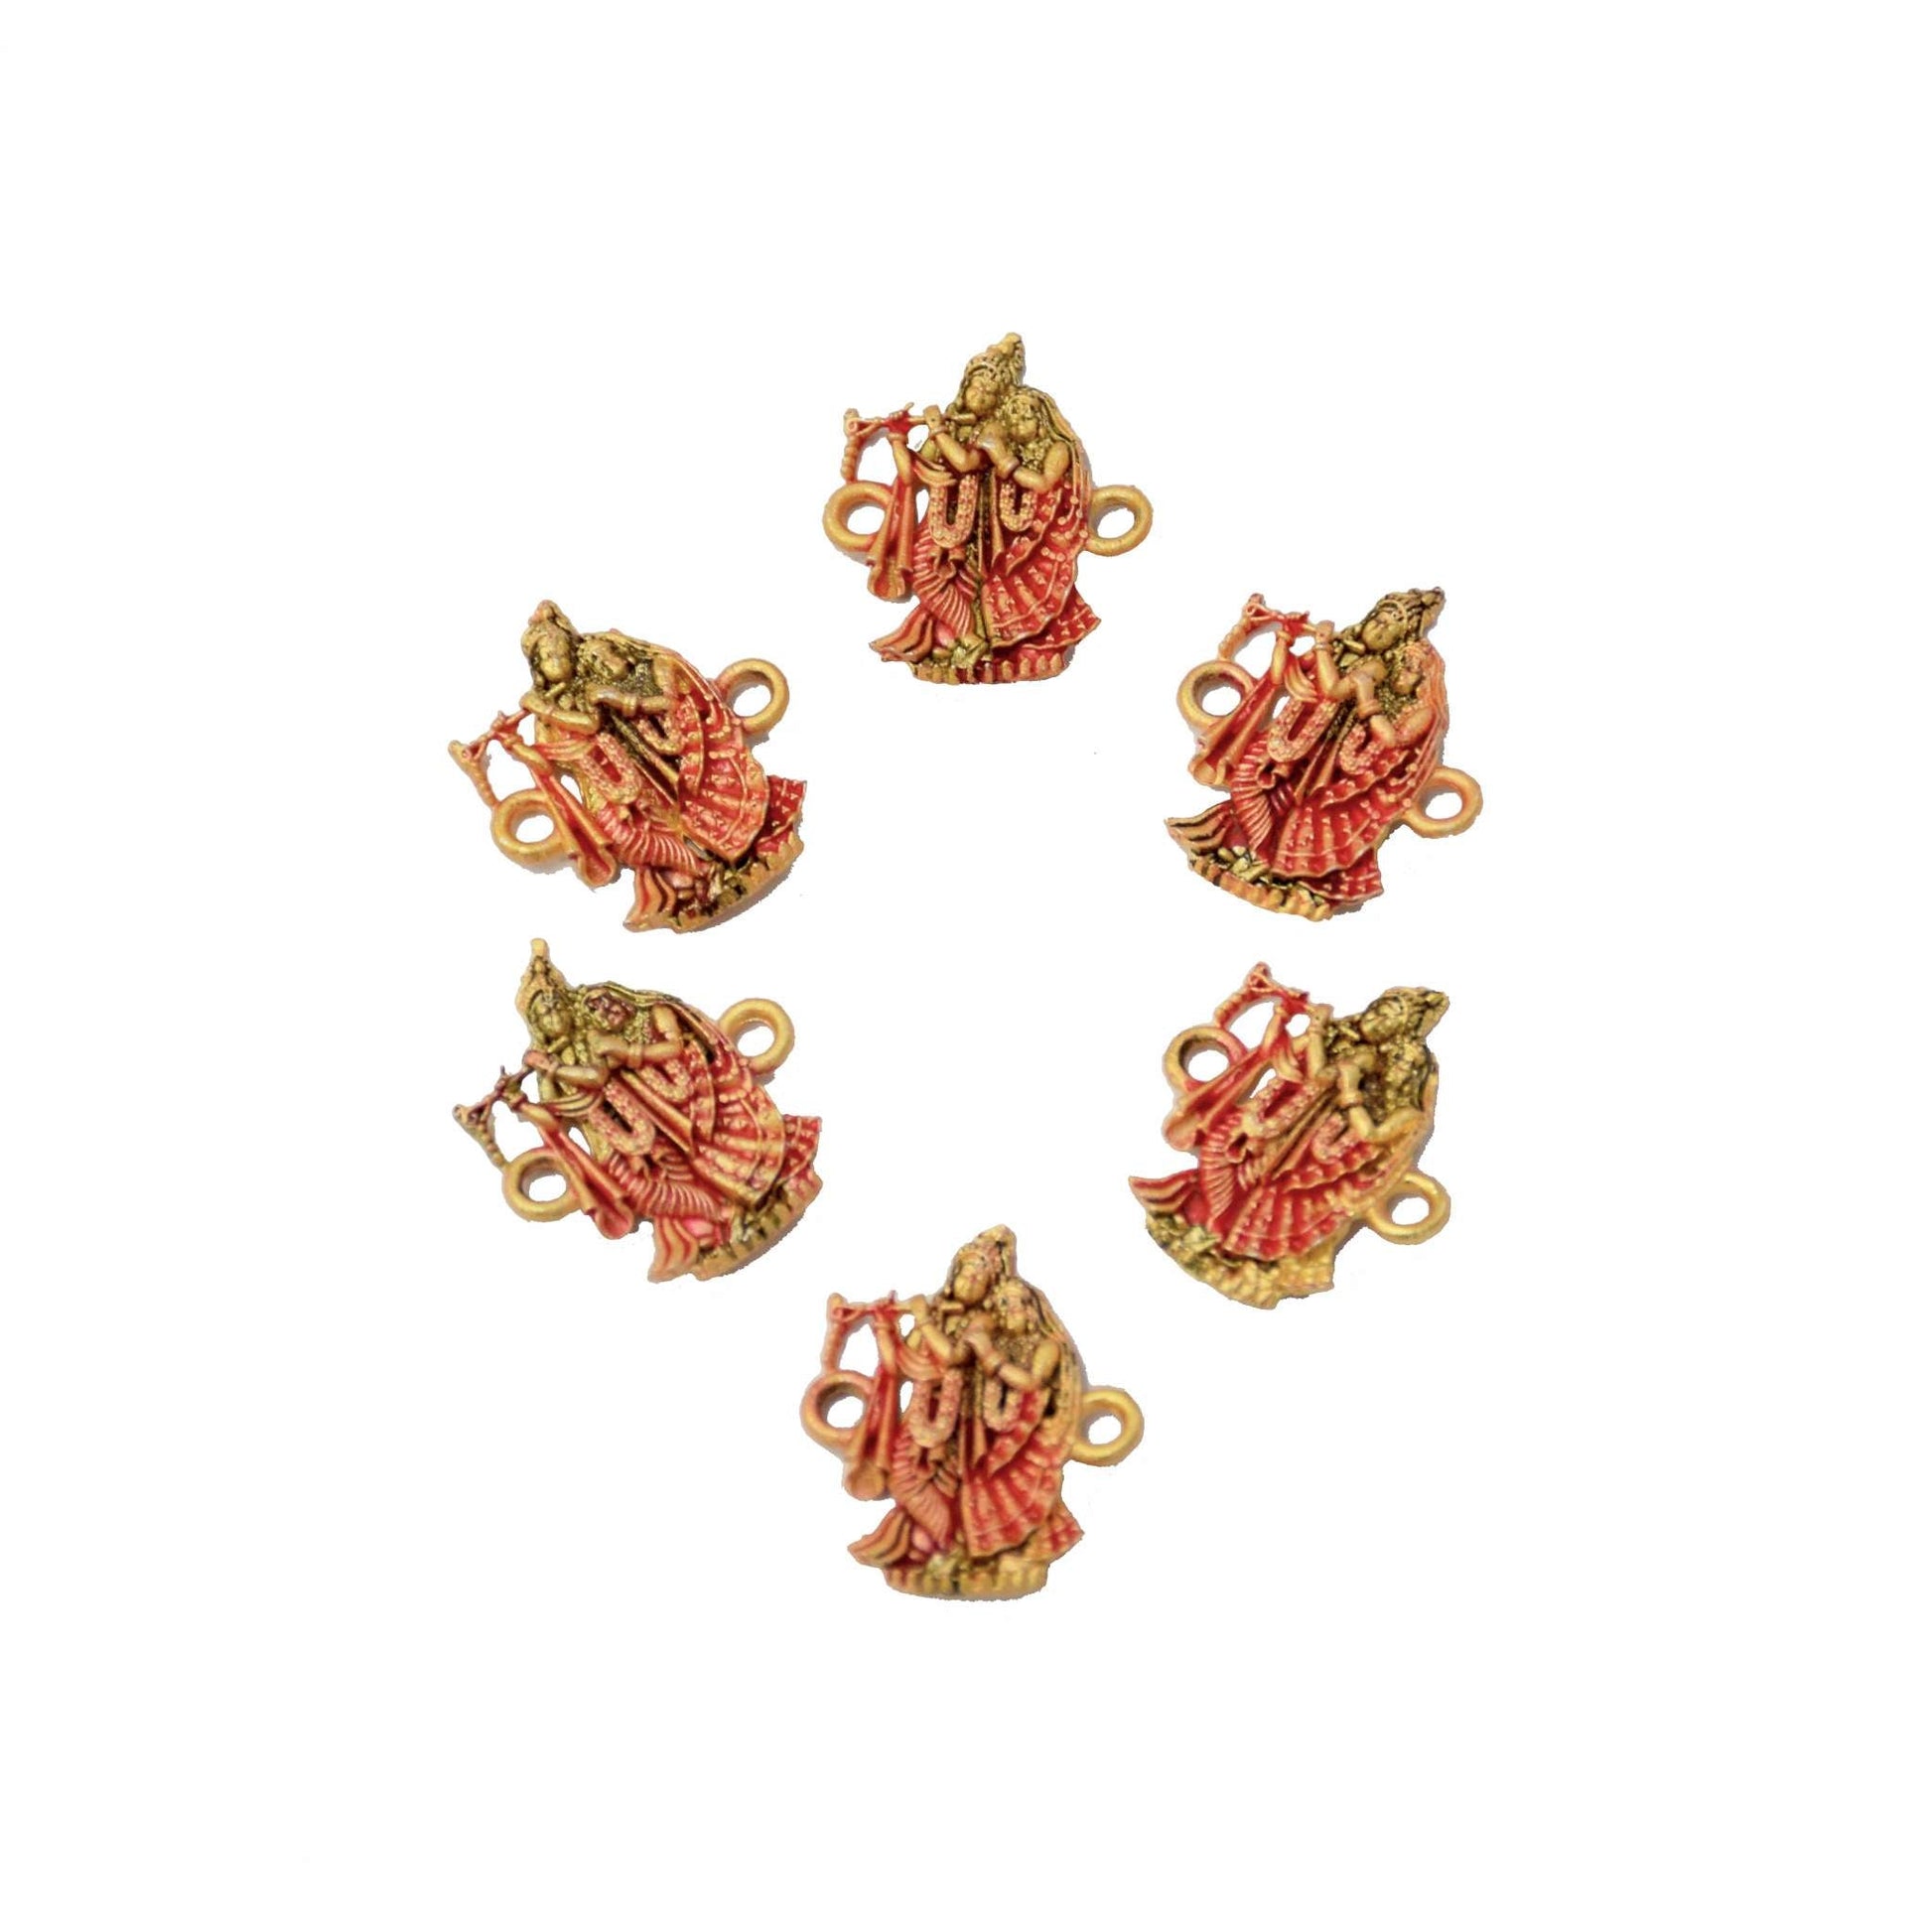 Indian Petals Enamel coated Beautiful Metal Lord Krishna Theme Motif for Craft Decoration or Rakhi - 12504, Rakha Krishna